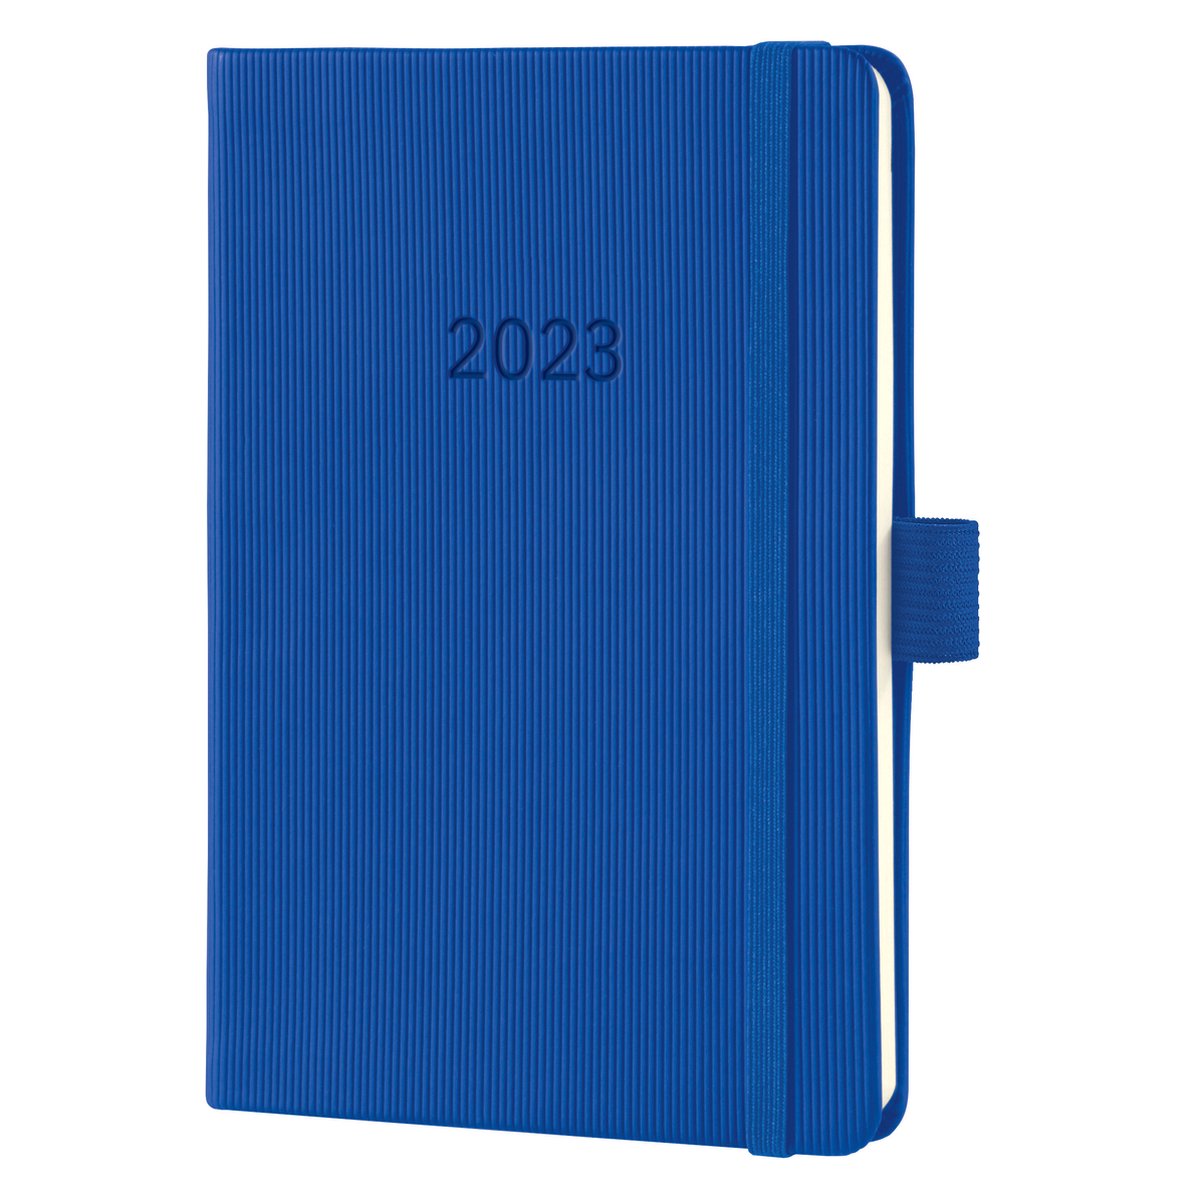 Sigel Conceptum - agenda 2023 - weekagenda - A6 - 4-talig - marine blue - hardcover. SI-C2369